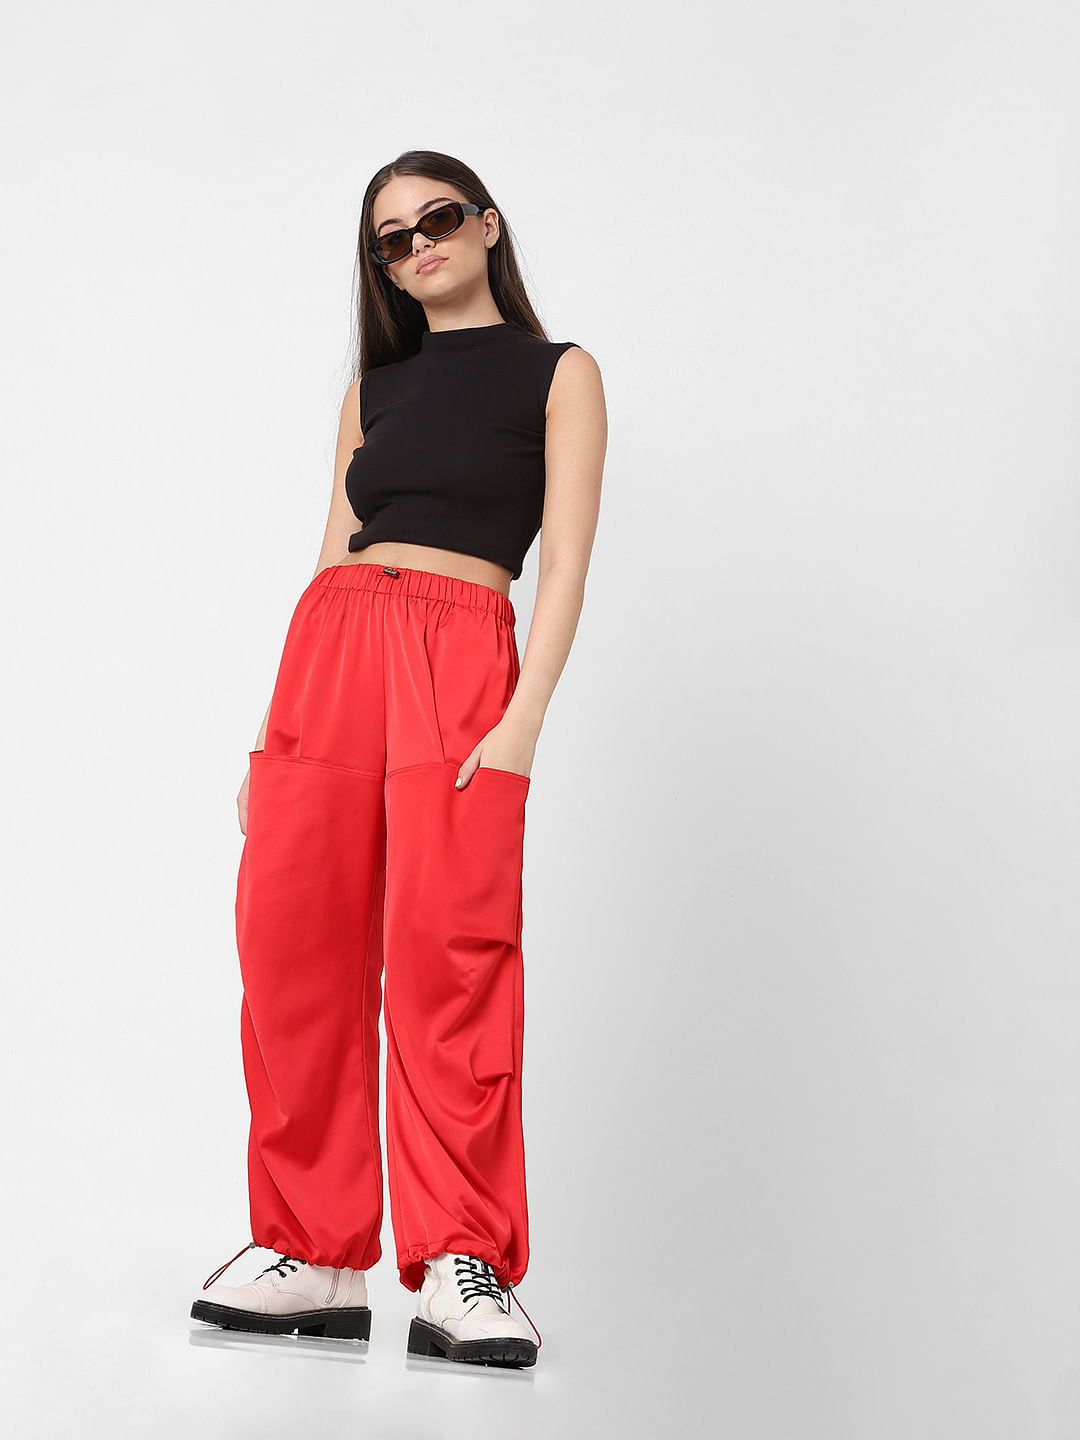 CHLOÉ | Red Women's Casual Pants | YOOX